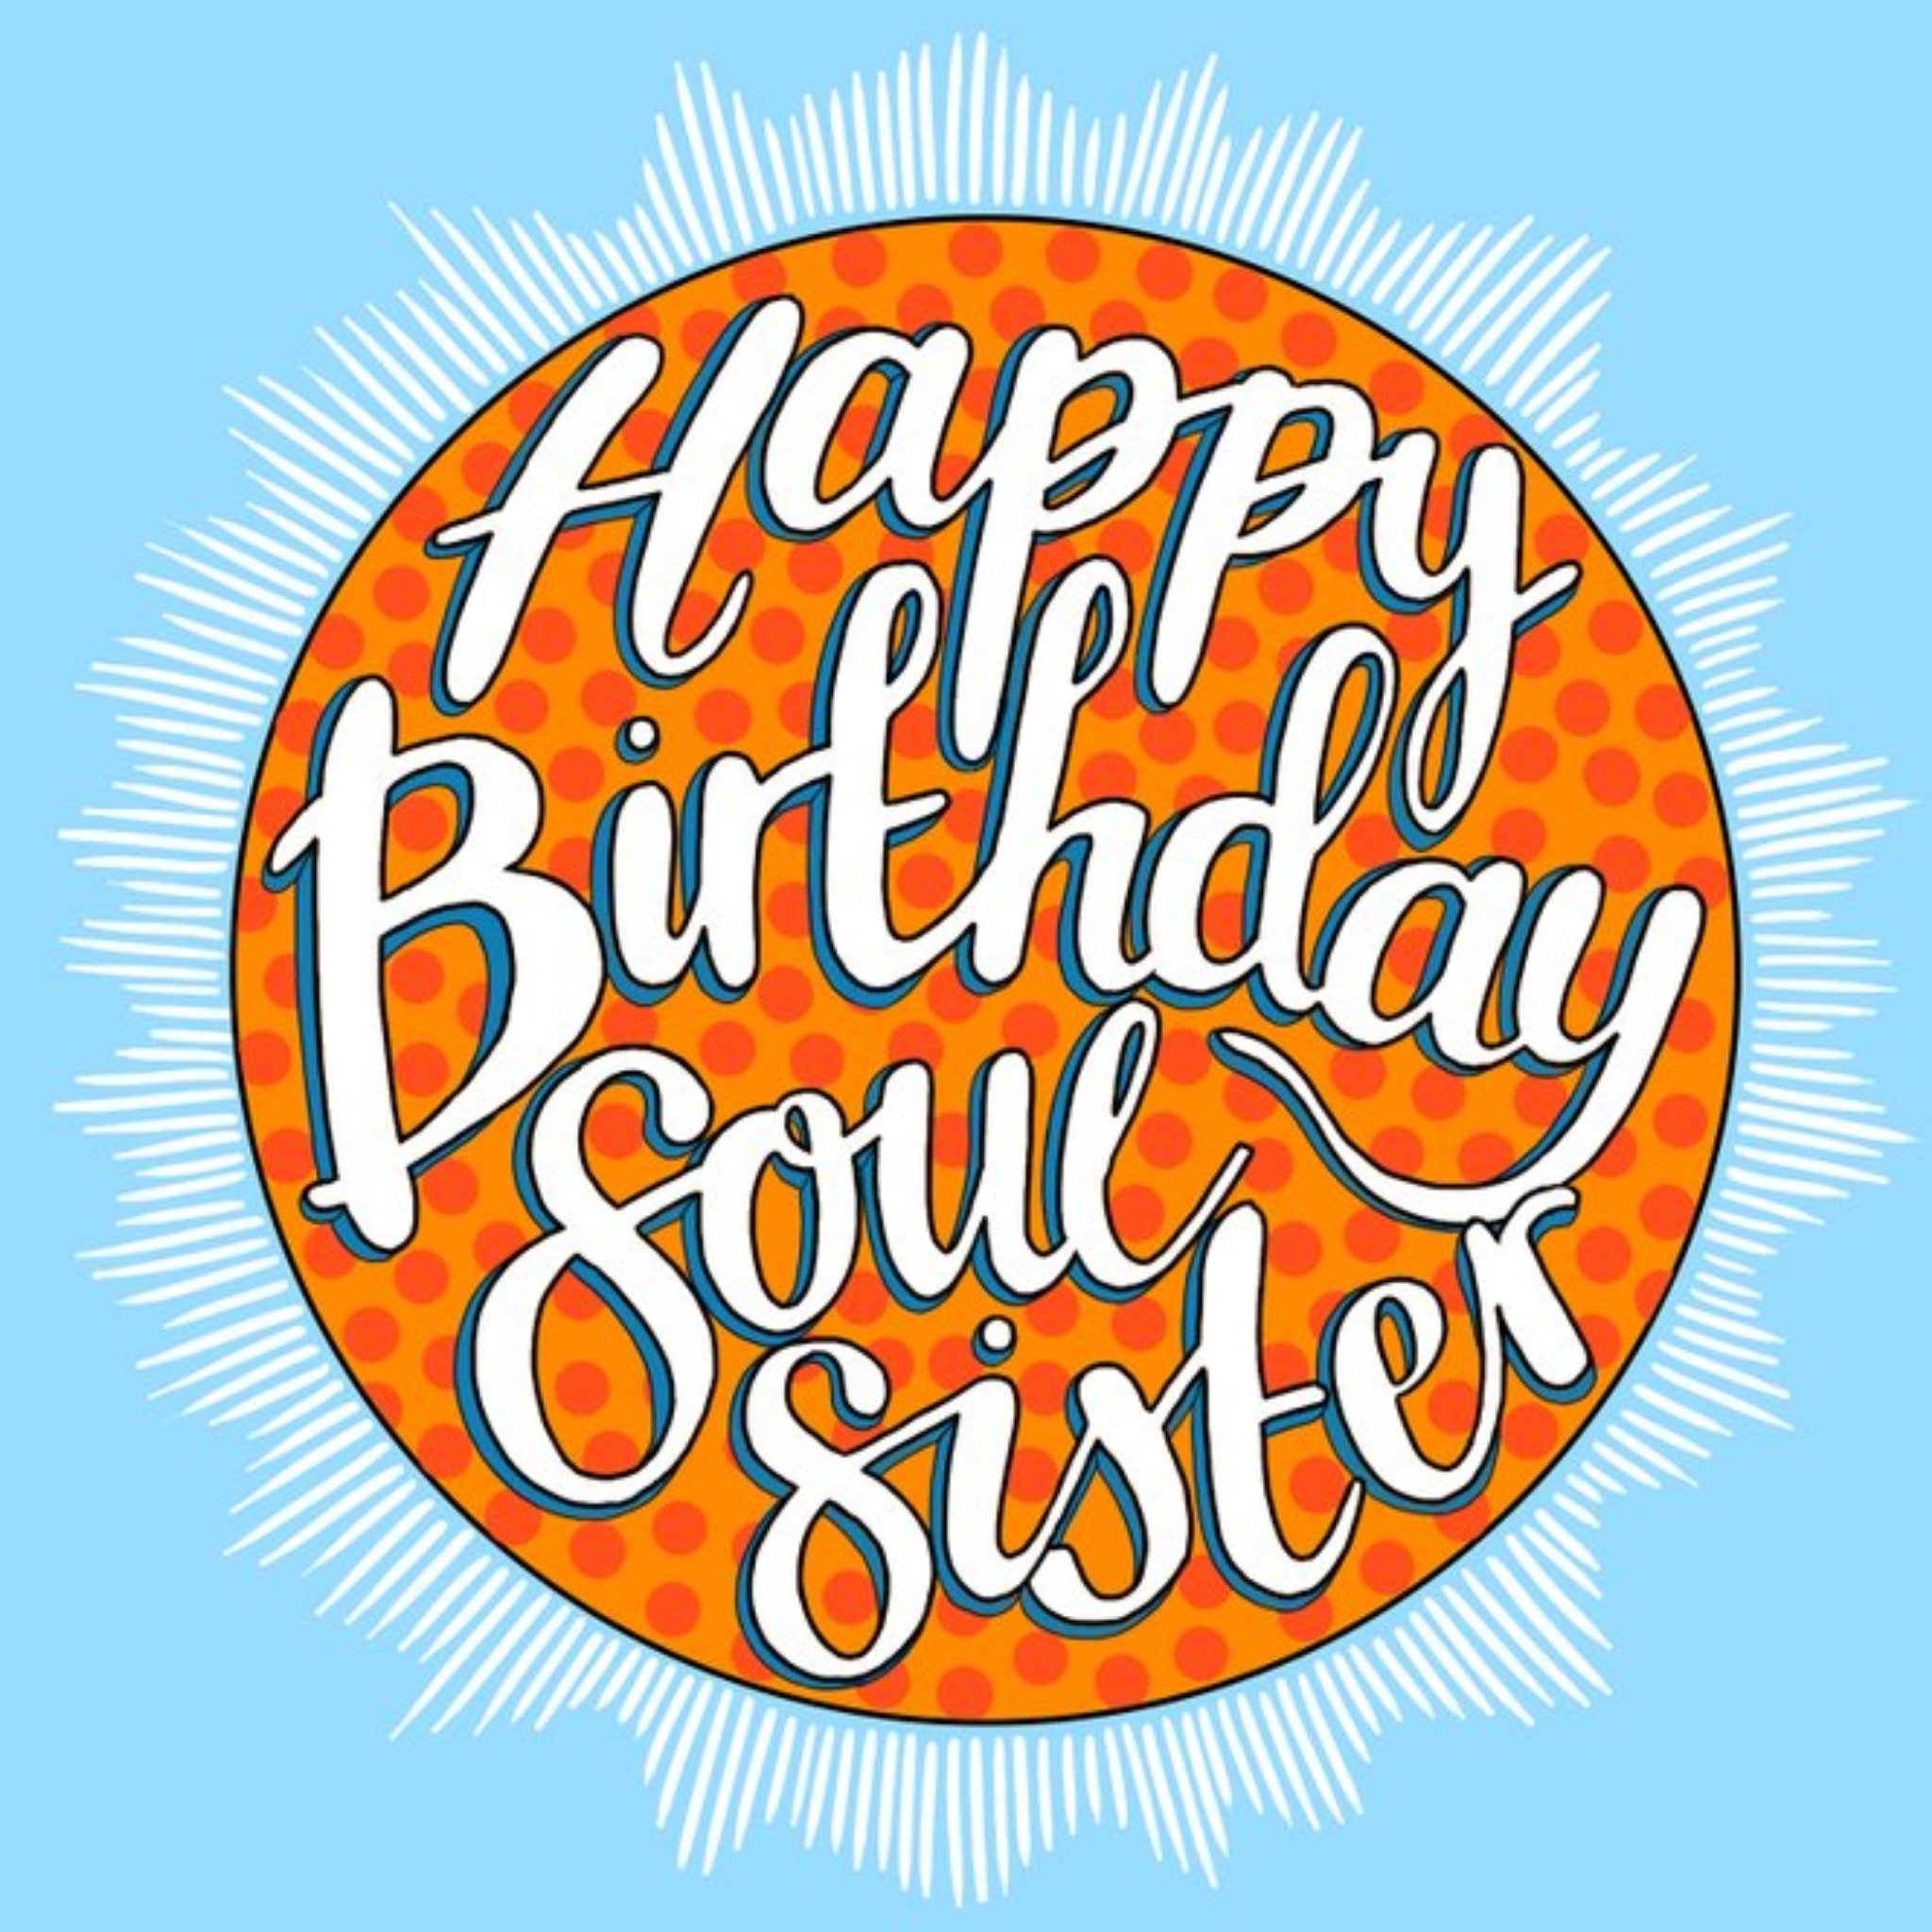 Moonpig Soul Sister Birthday Card, Square